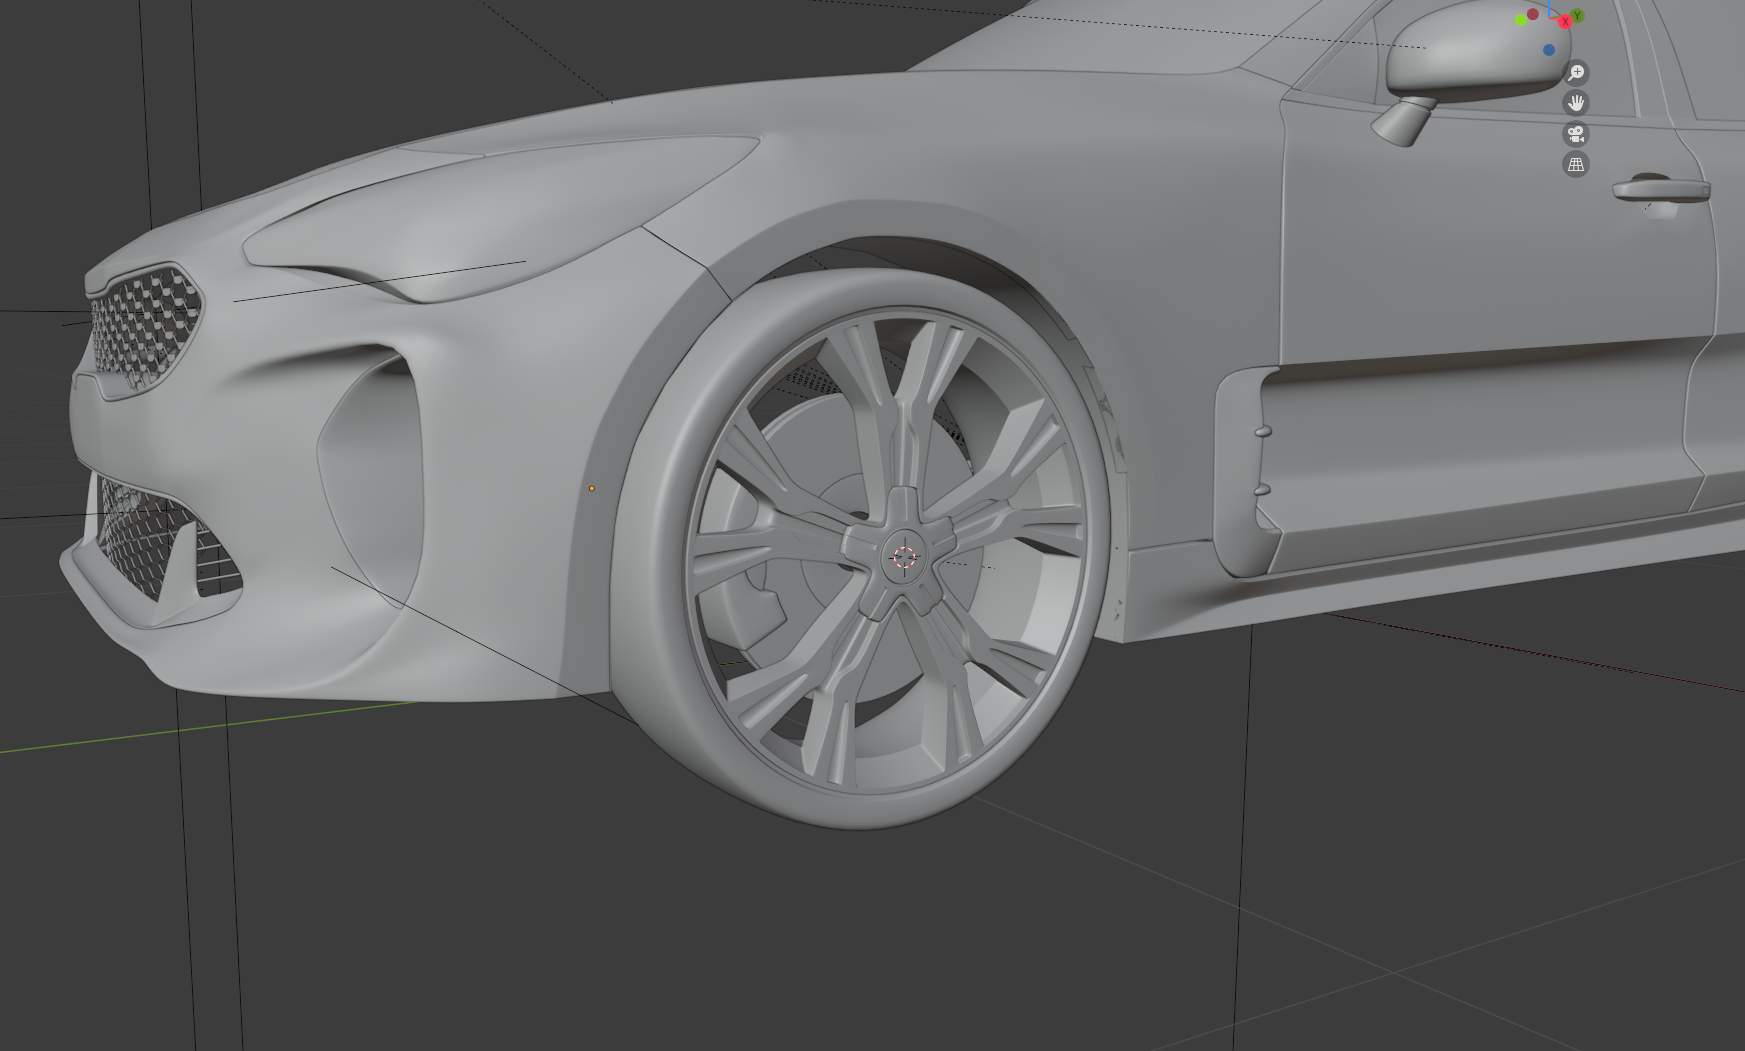 Kia Stinger - Car render challenge 2020